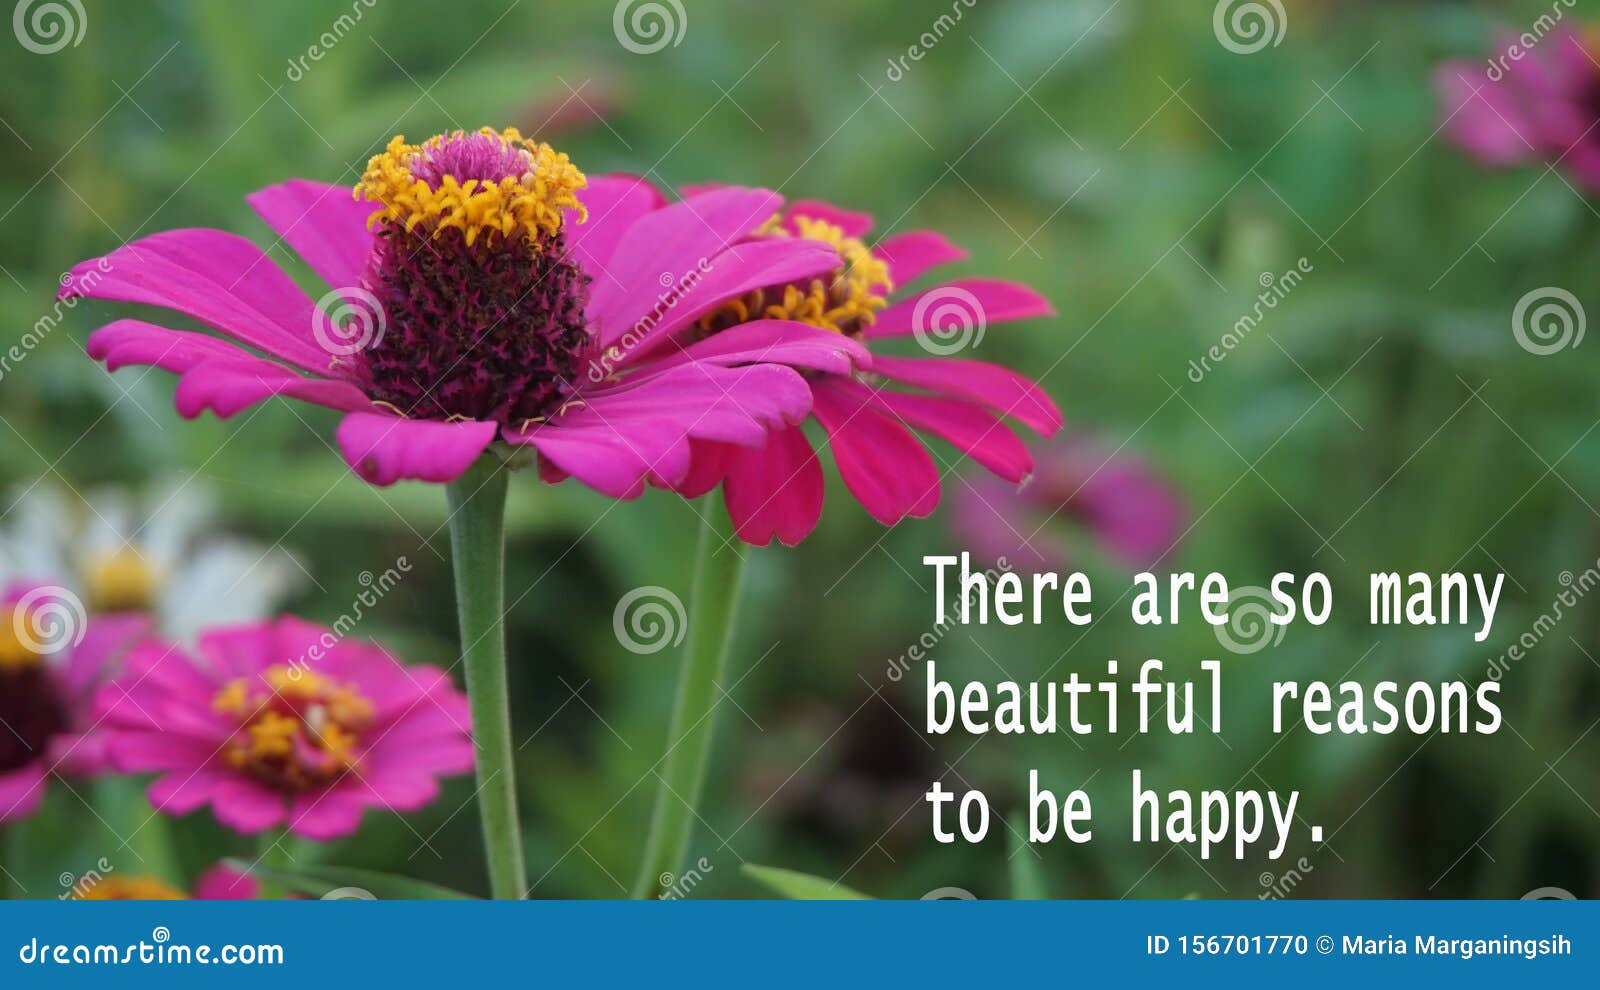 Happiness Inspirational Words Zinnia Pink Flowers In The Garden